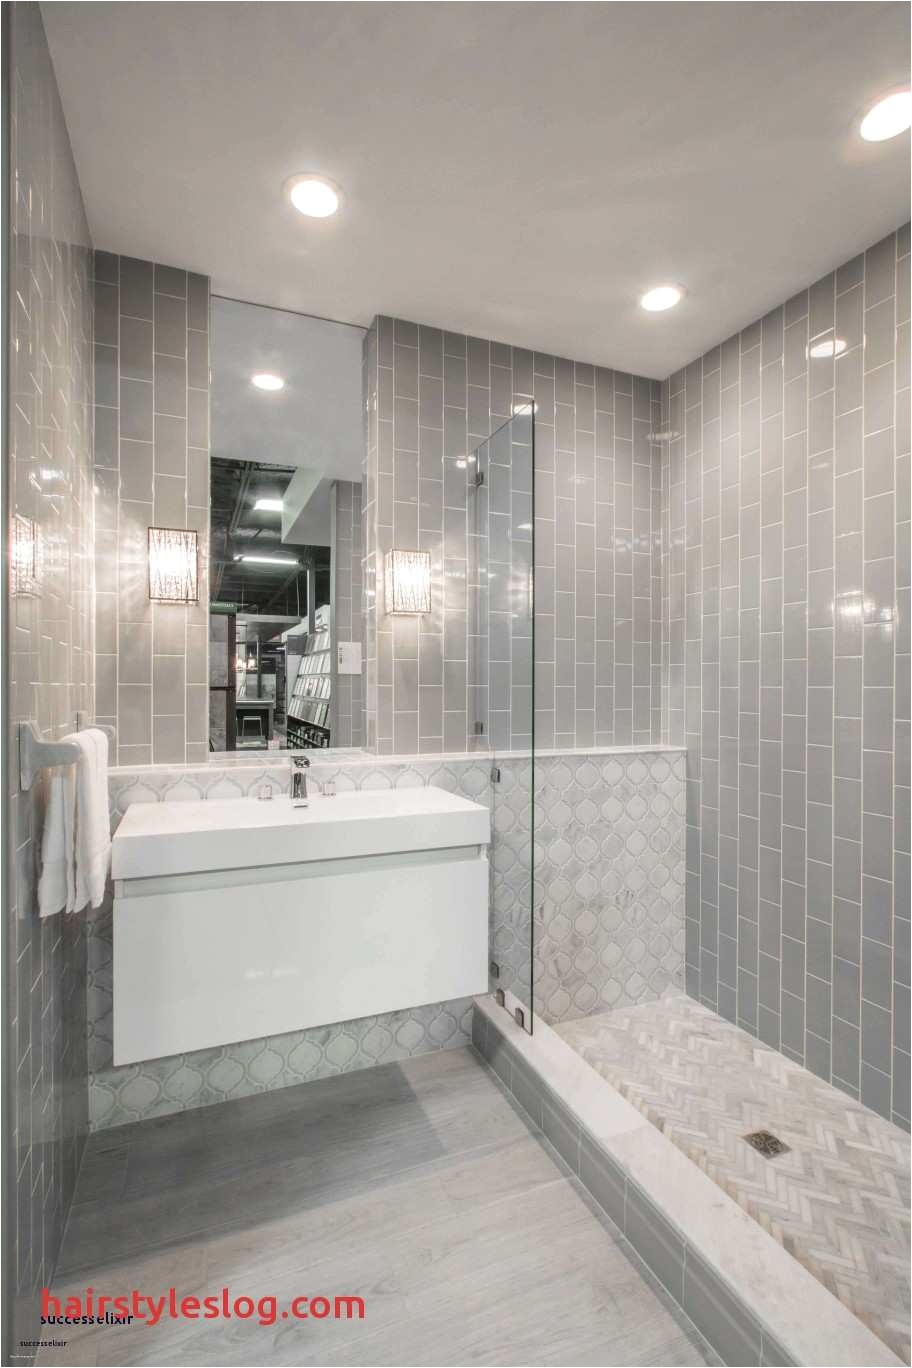 Bathroom Design Ideas Shower Bath the Amazing Tile Design Ideas for Bathroom Showers Intended for Your